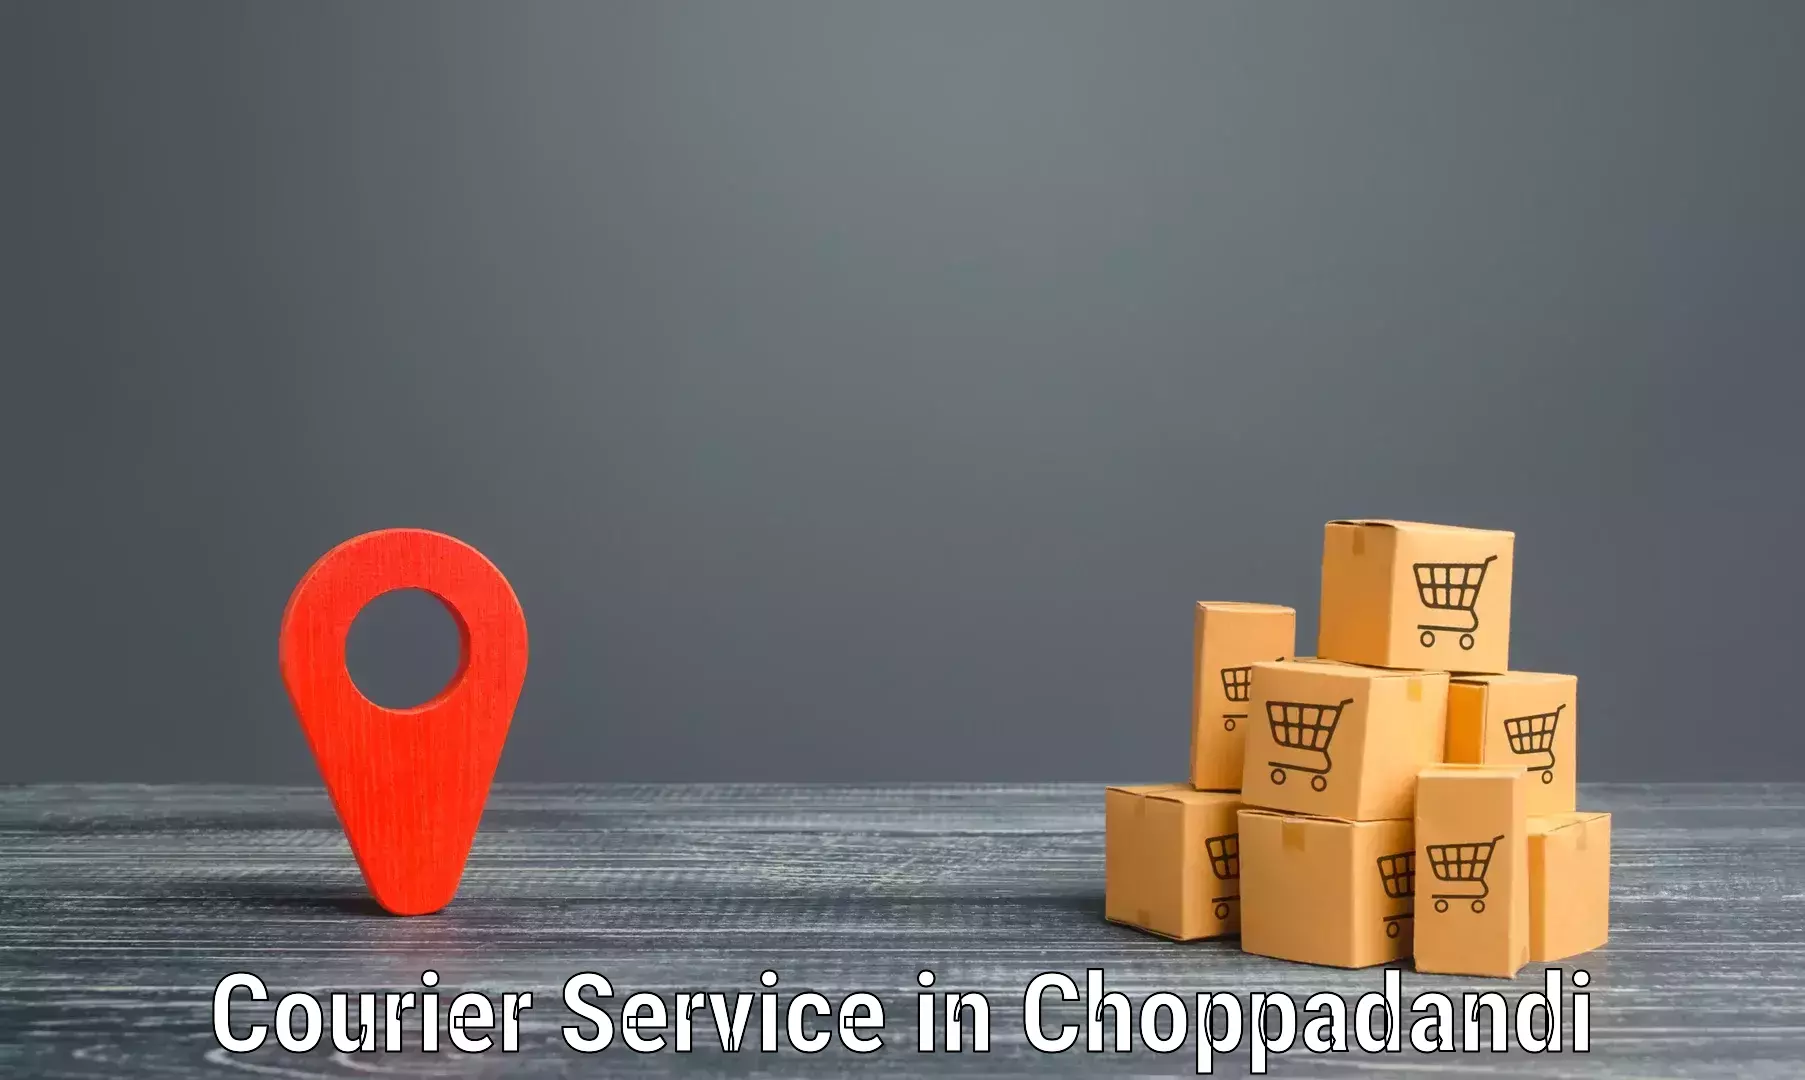 International shipping in Choppadandi